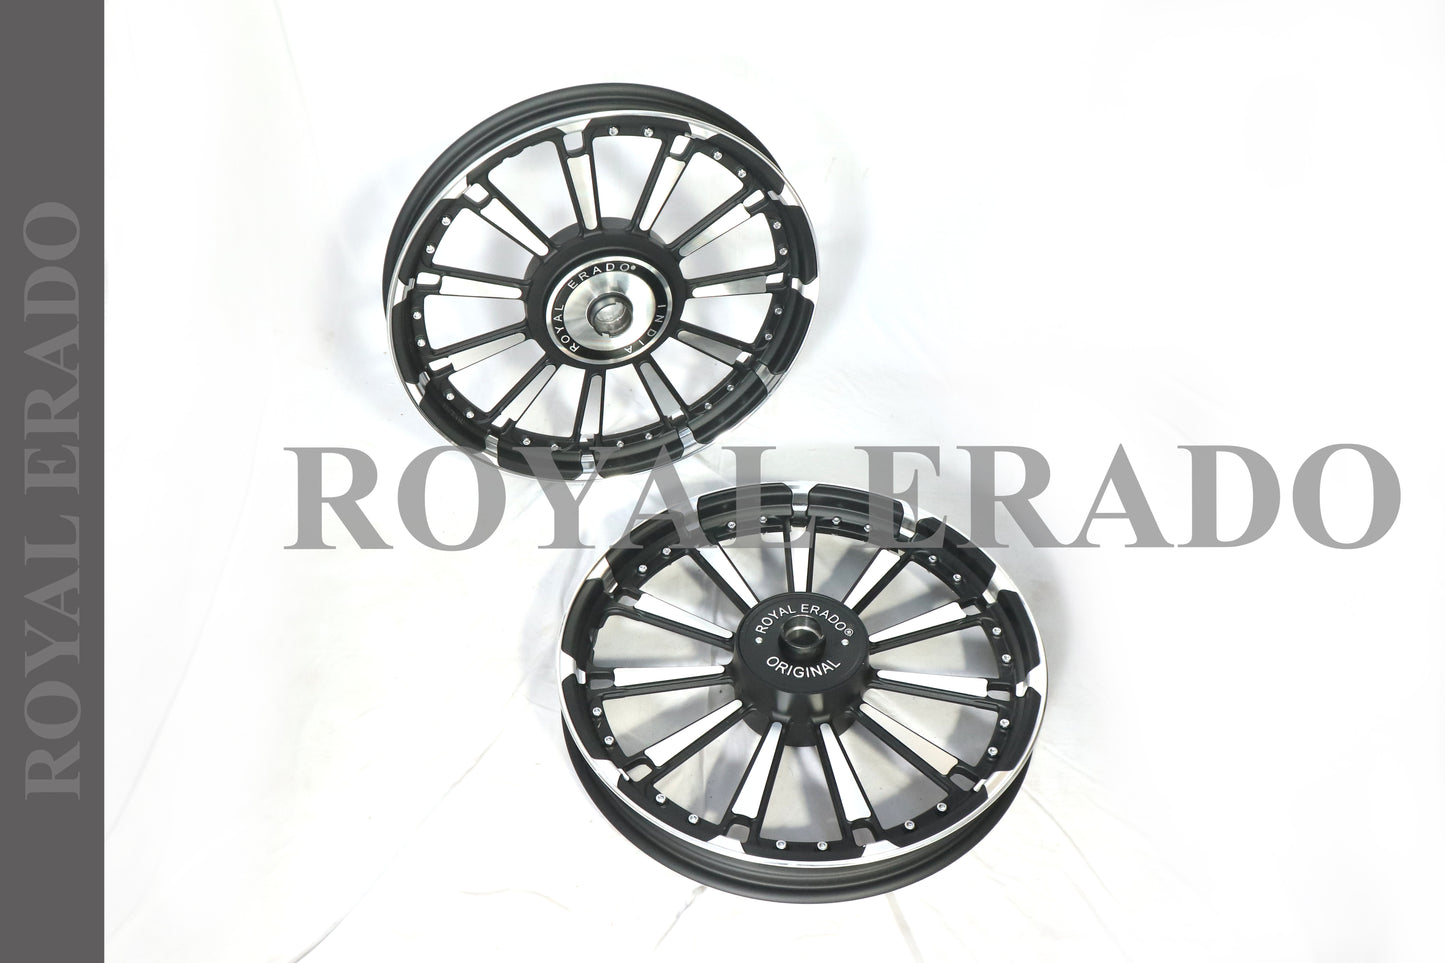 11 SPOKE RAJPUTANA DESIGN alloy wheel for thunderbird and classic double disc